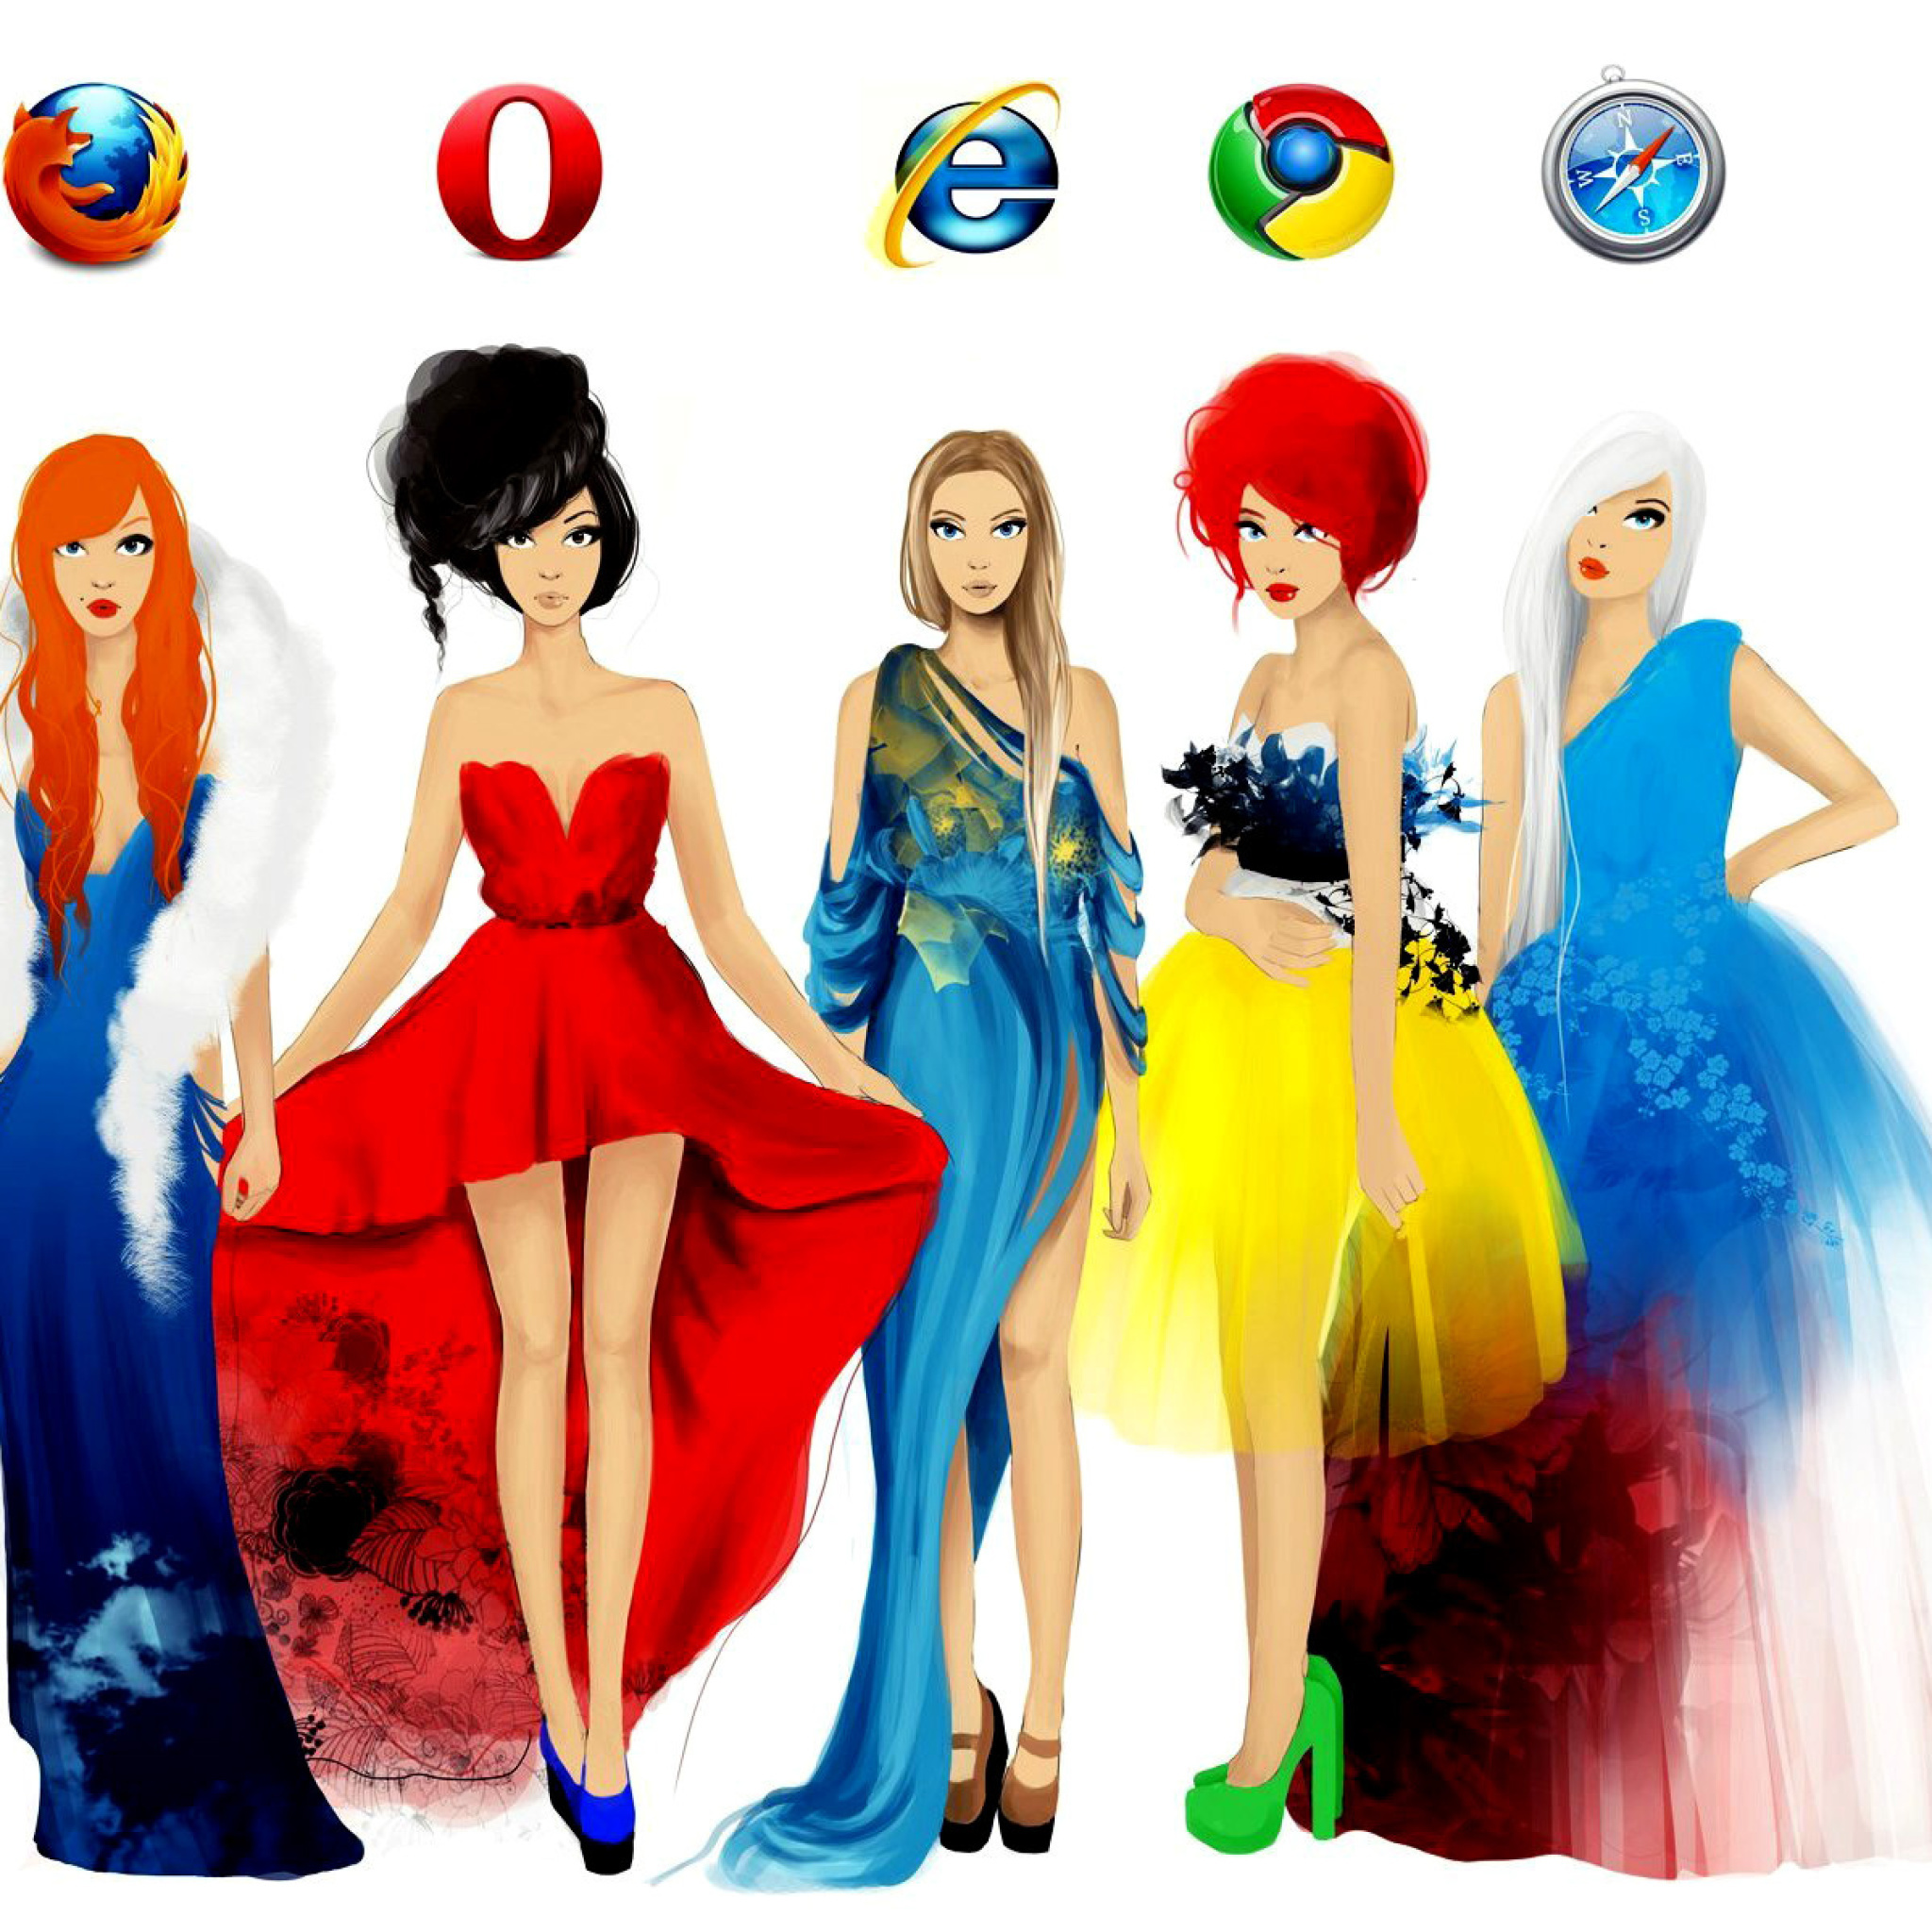 Das Browsers Girls Wallpaper 2048x2048